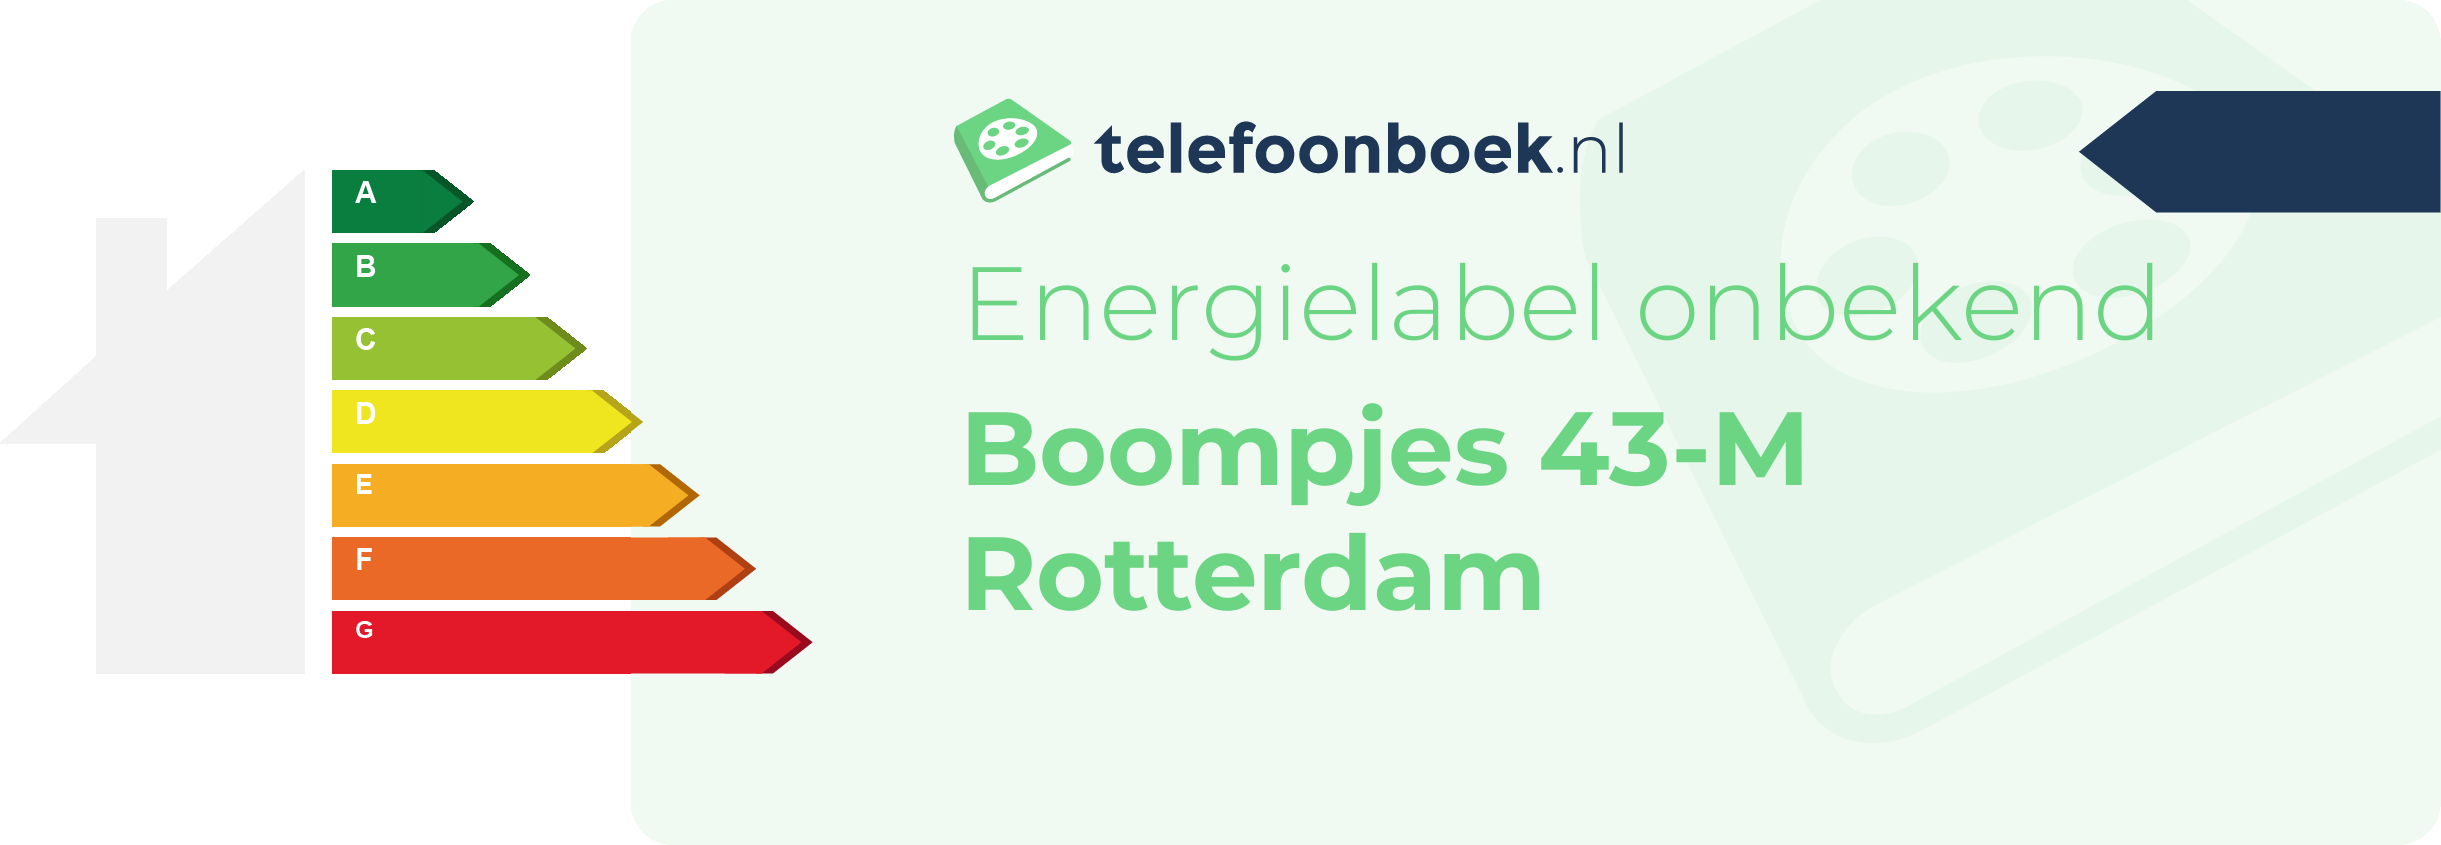 Energielabel Boompjes 43-M Rotterdam